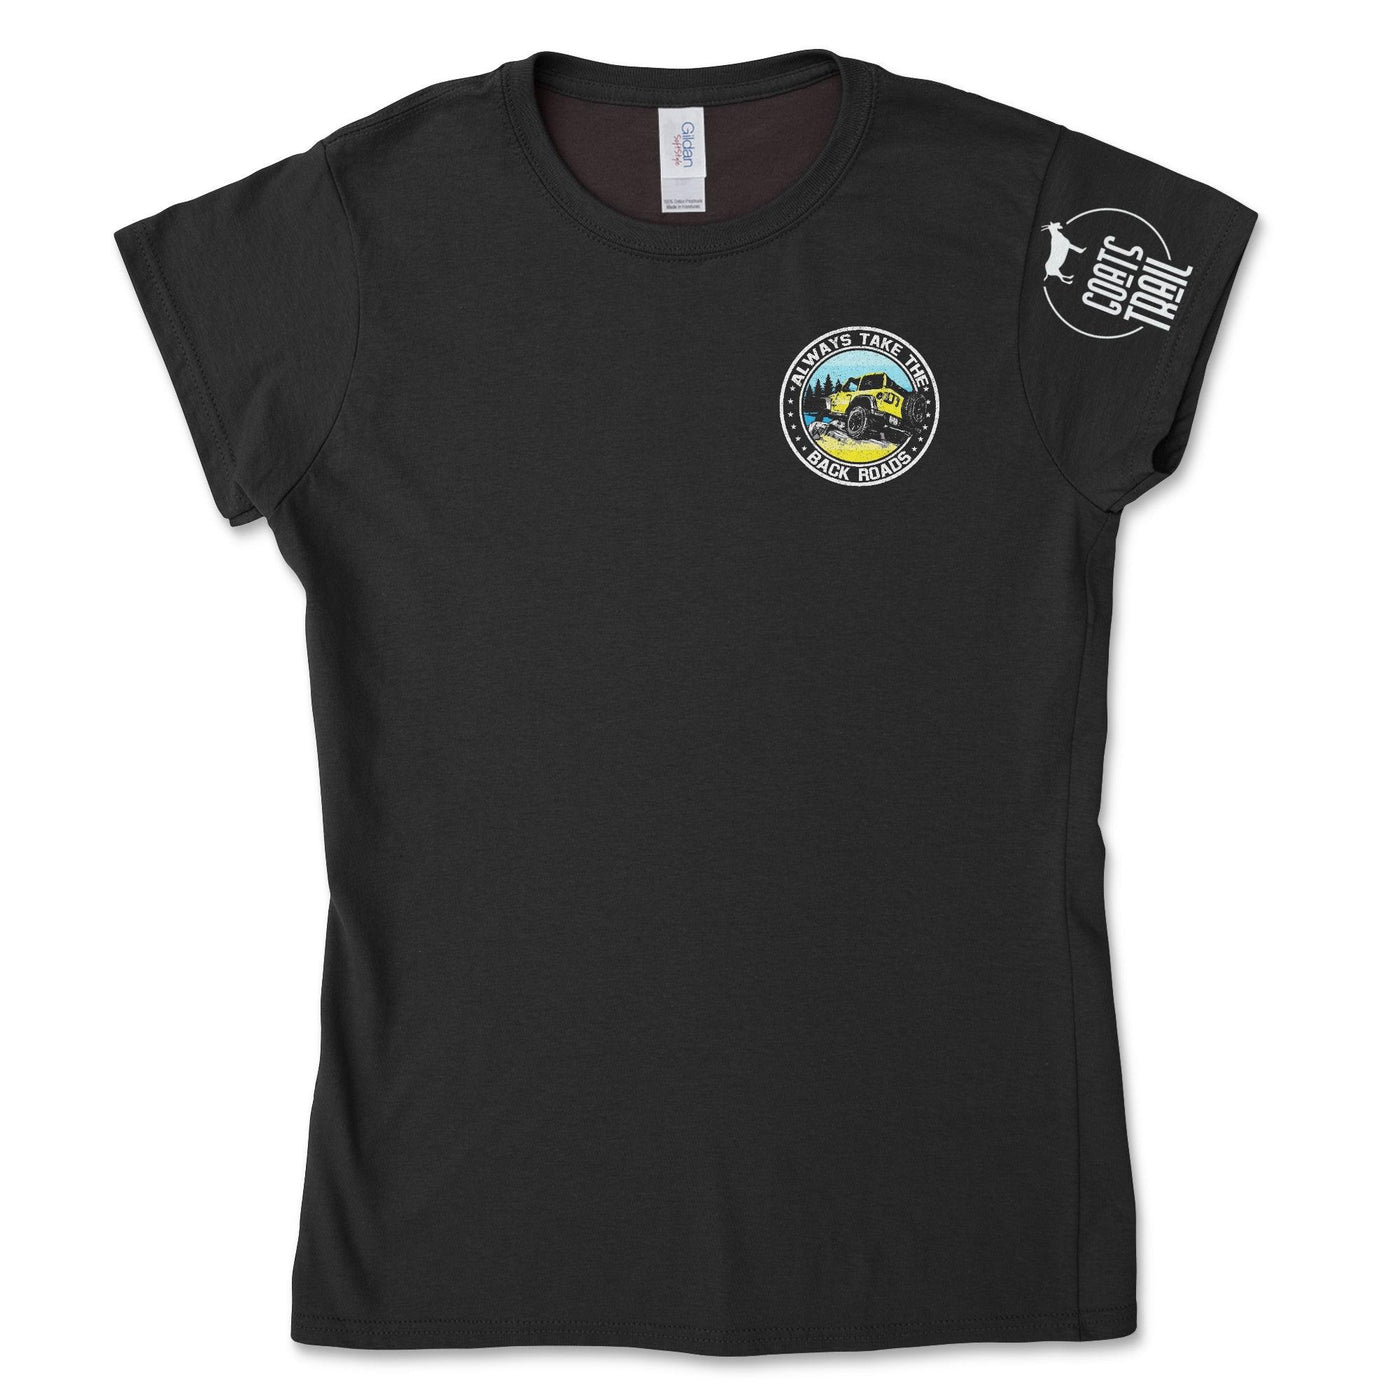 Women's Jeep Slim Fit T-shirt - Goats Trail